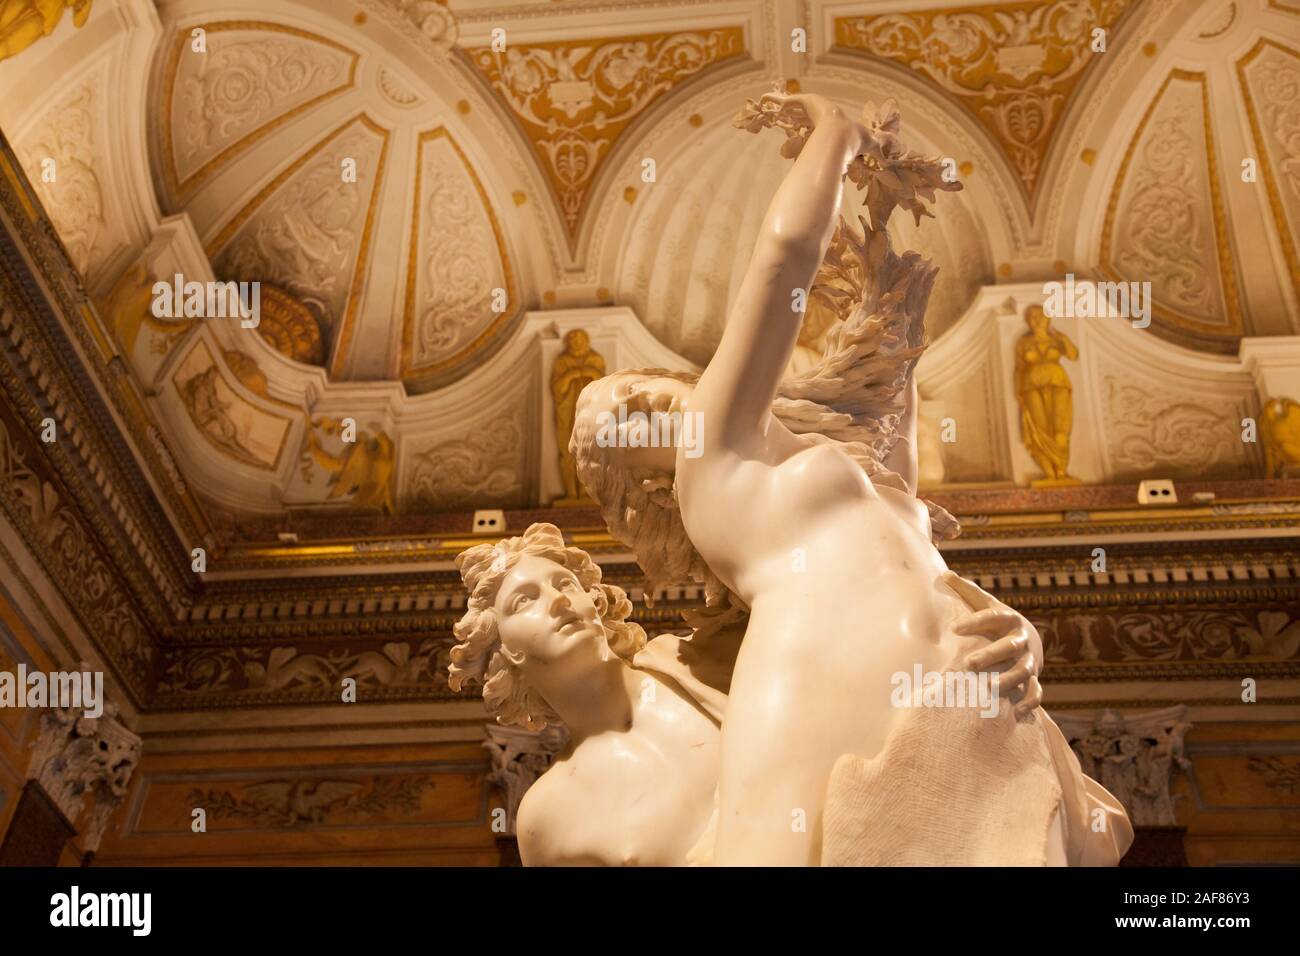 The sculpture Apollo and Daphne by Bernini in the Galleria Borghese, Rome Stock Photo